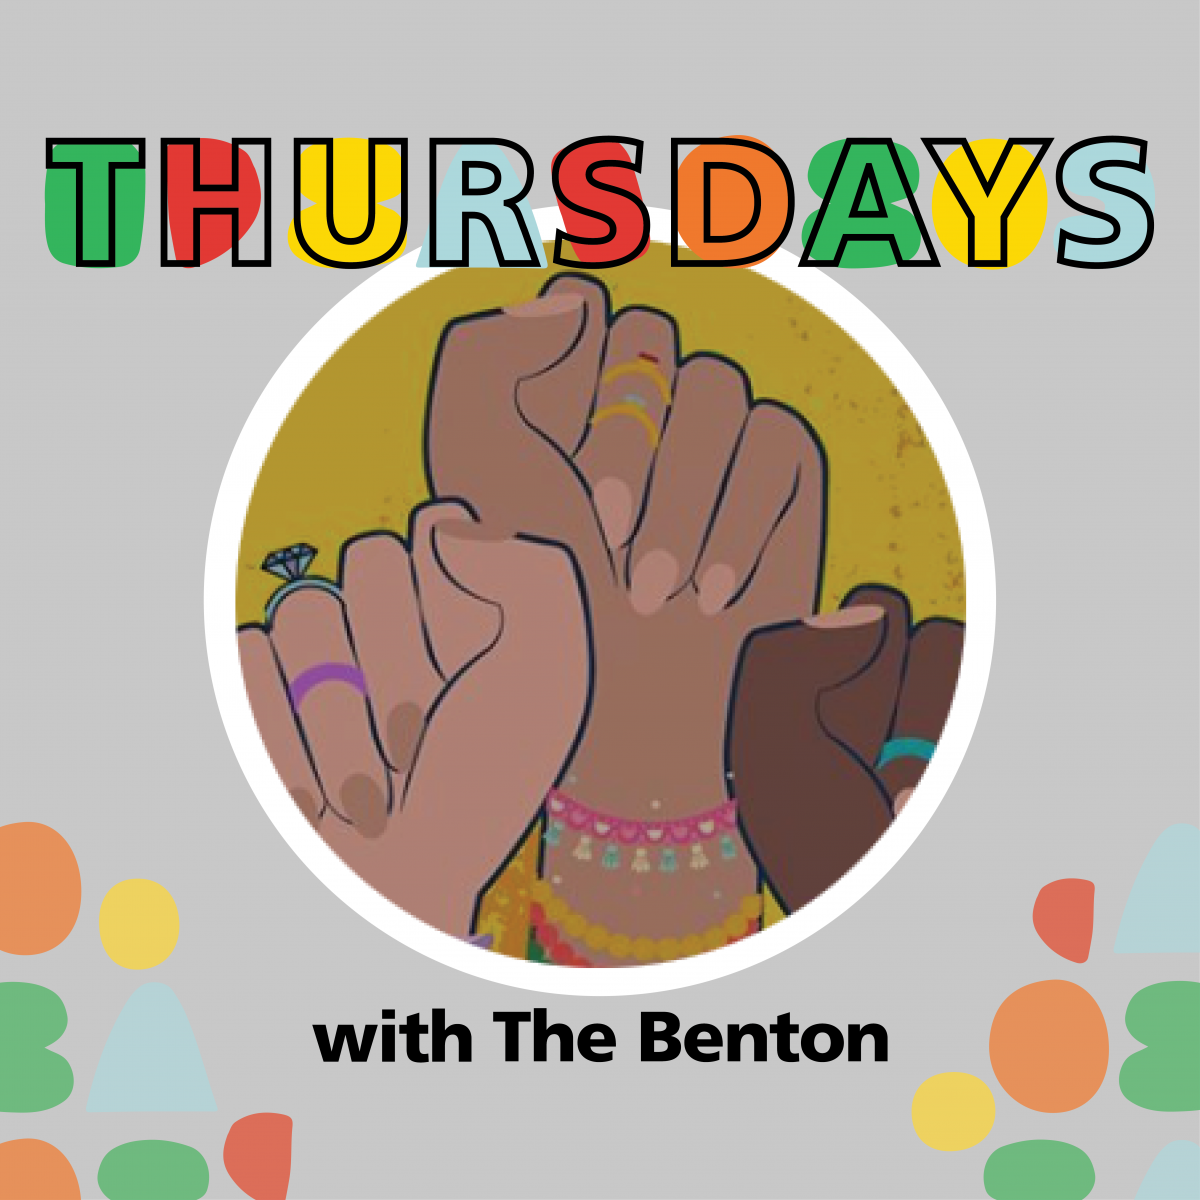 Thursdays With The Benton, Oct 15 event logo